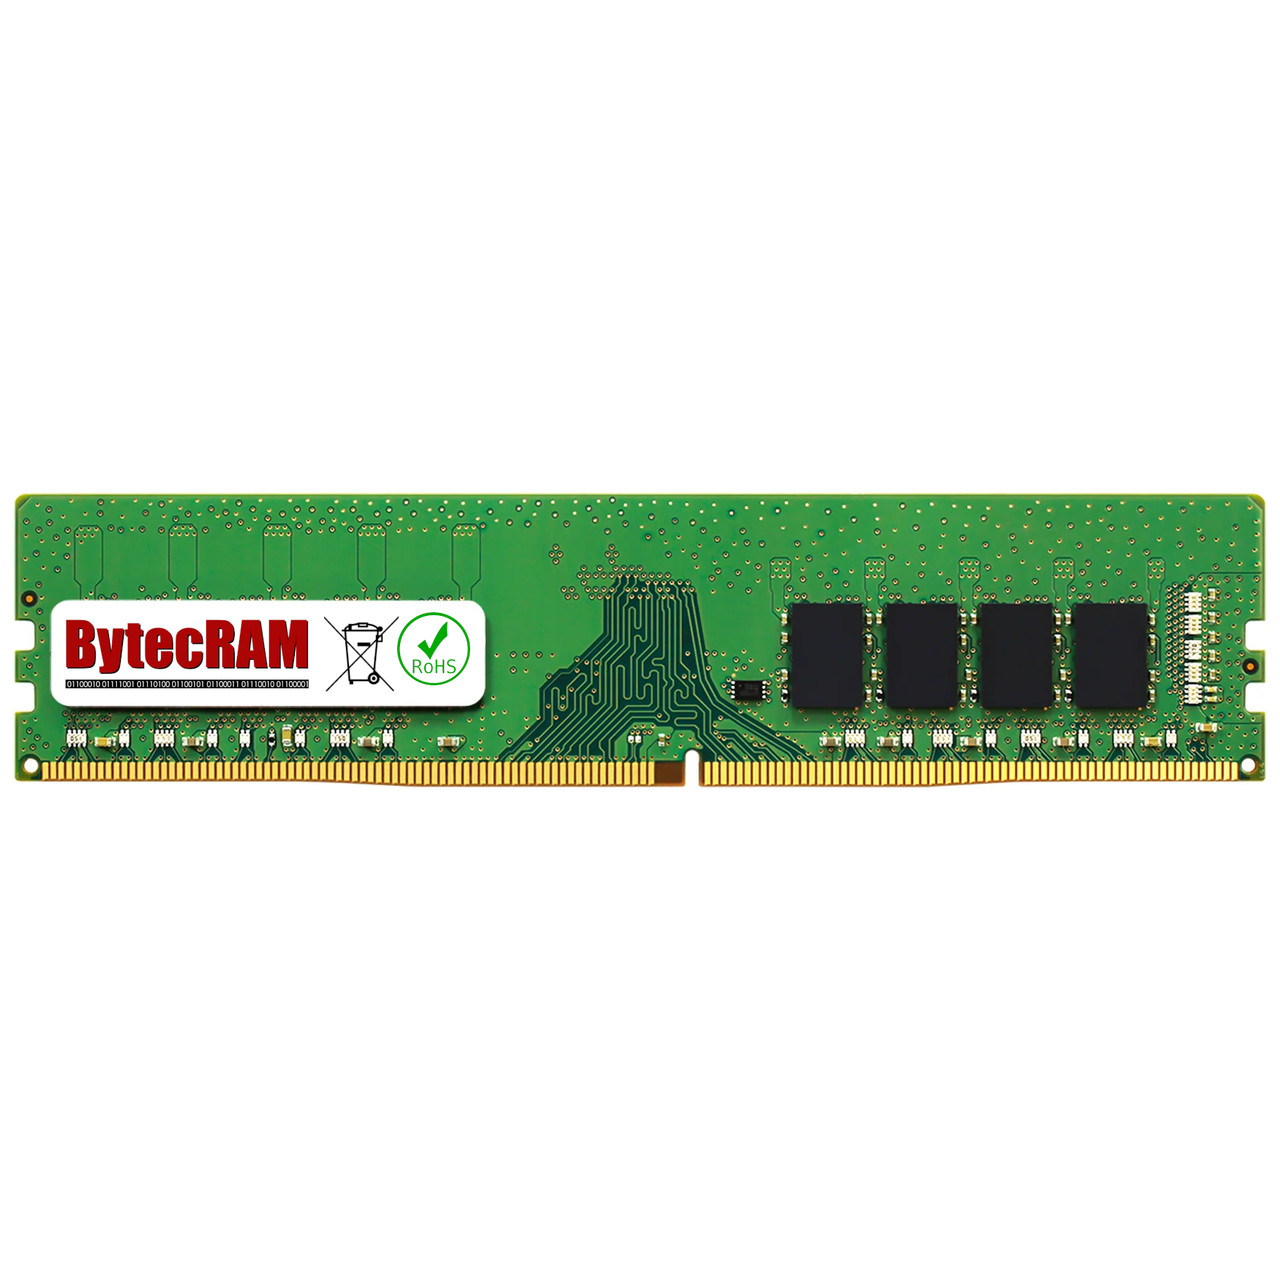 eBay*32GB Acer Predator PO3-600-UR14 DDR4 2666MHz UDIMM Memory RAM Upgrade